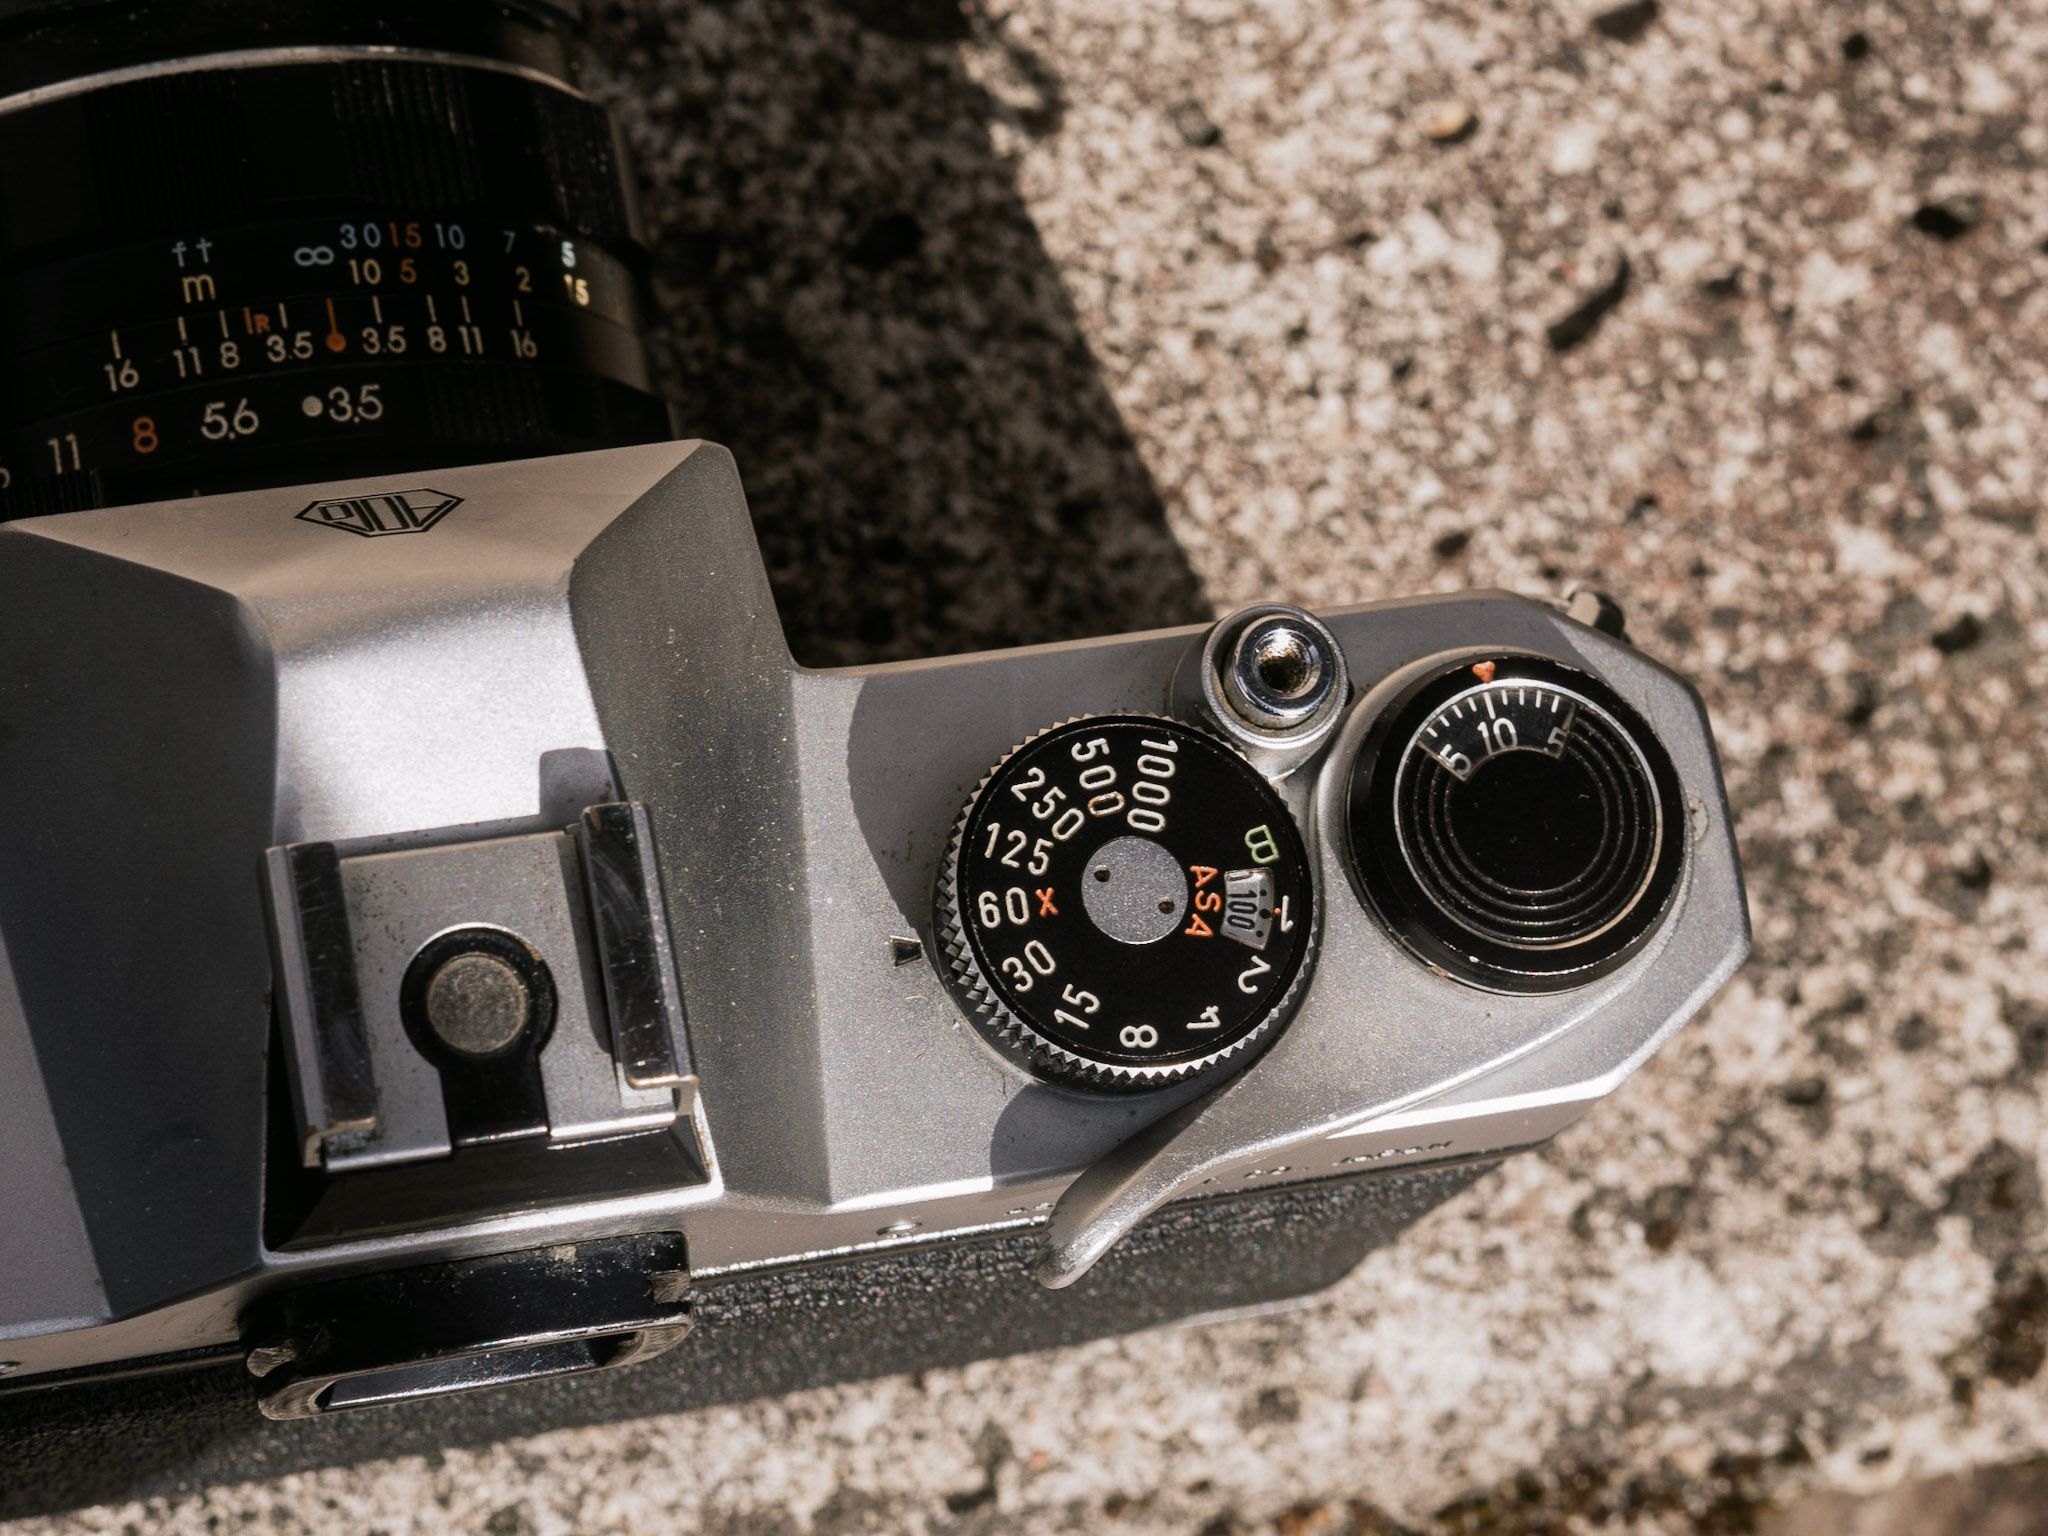 Asahi Pentax Spotmatic SPII Film Camera Review - 50mmF2